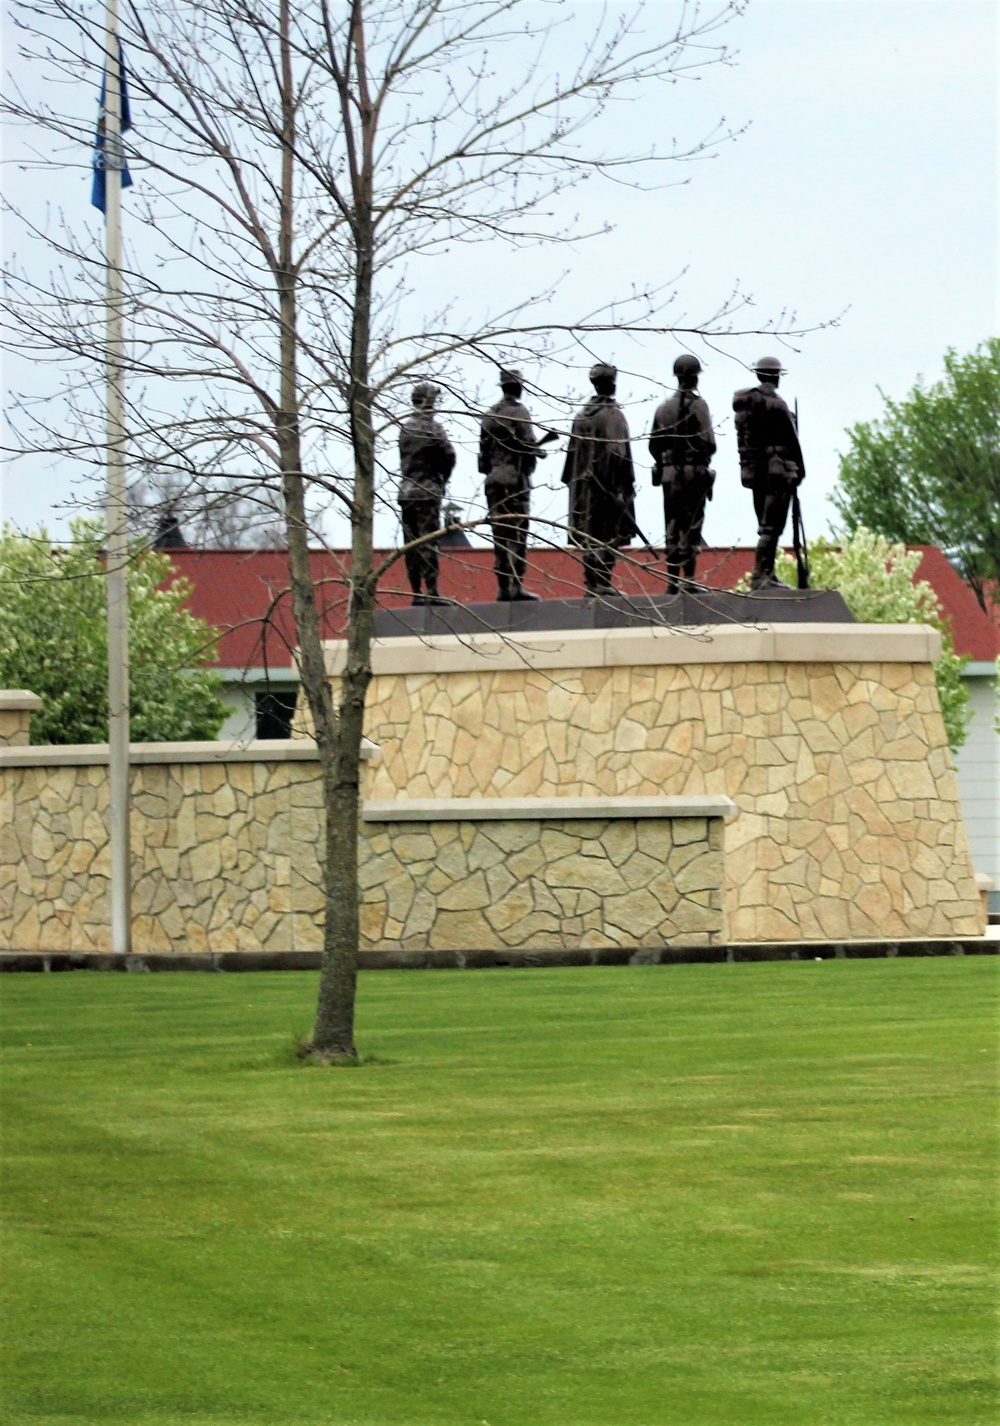 Fort McCoy's Commemorative Area